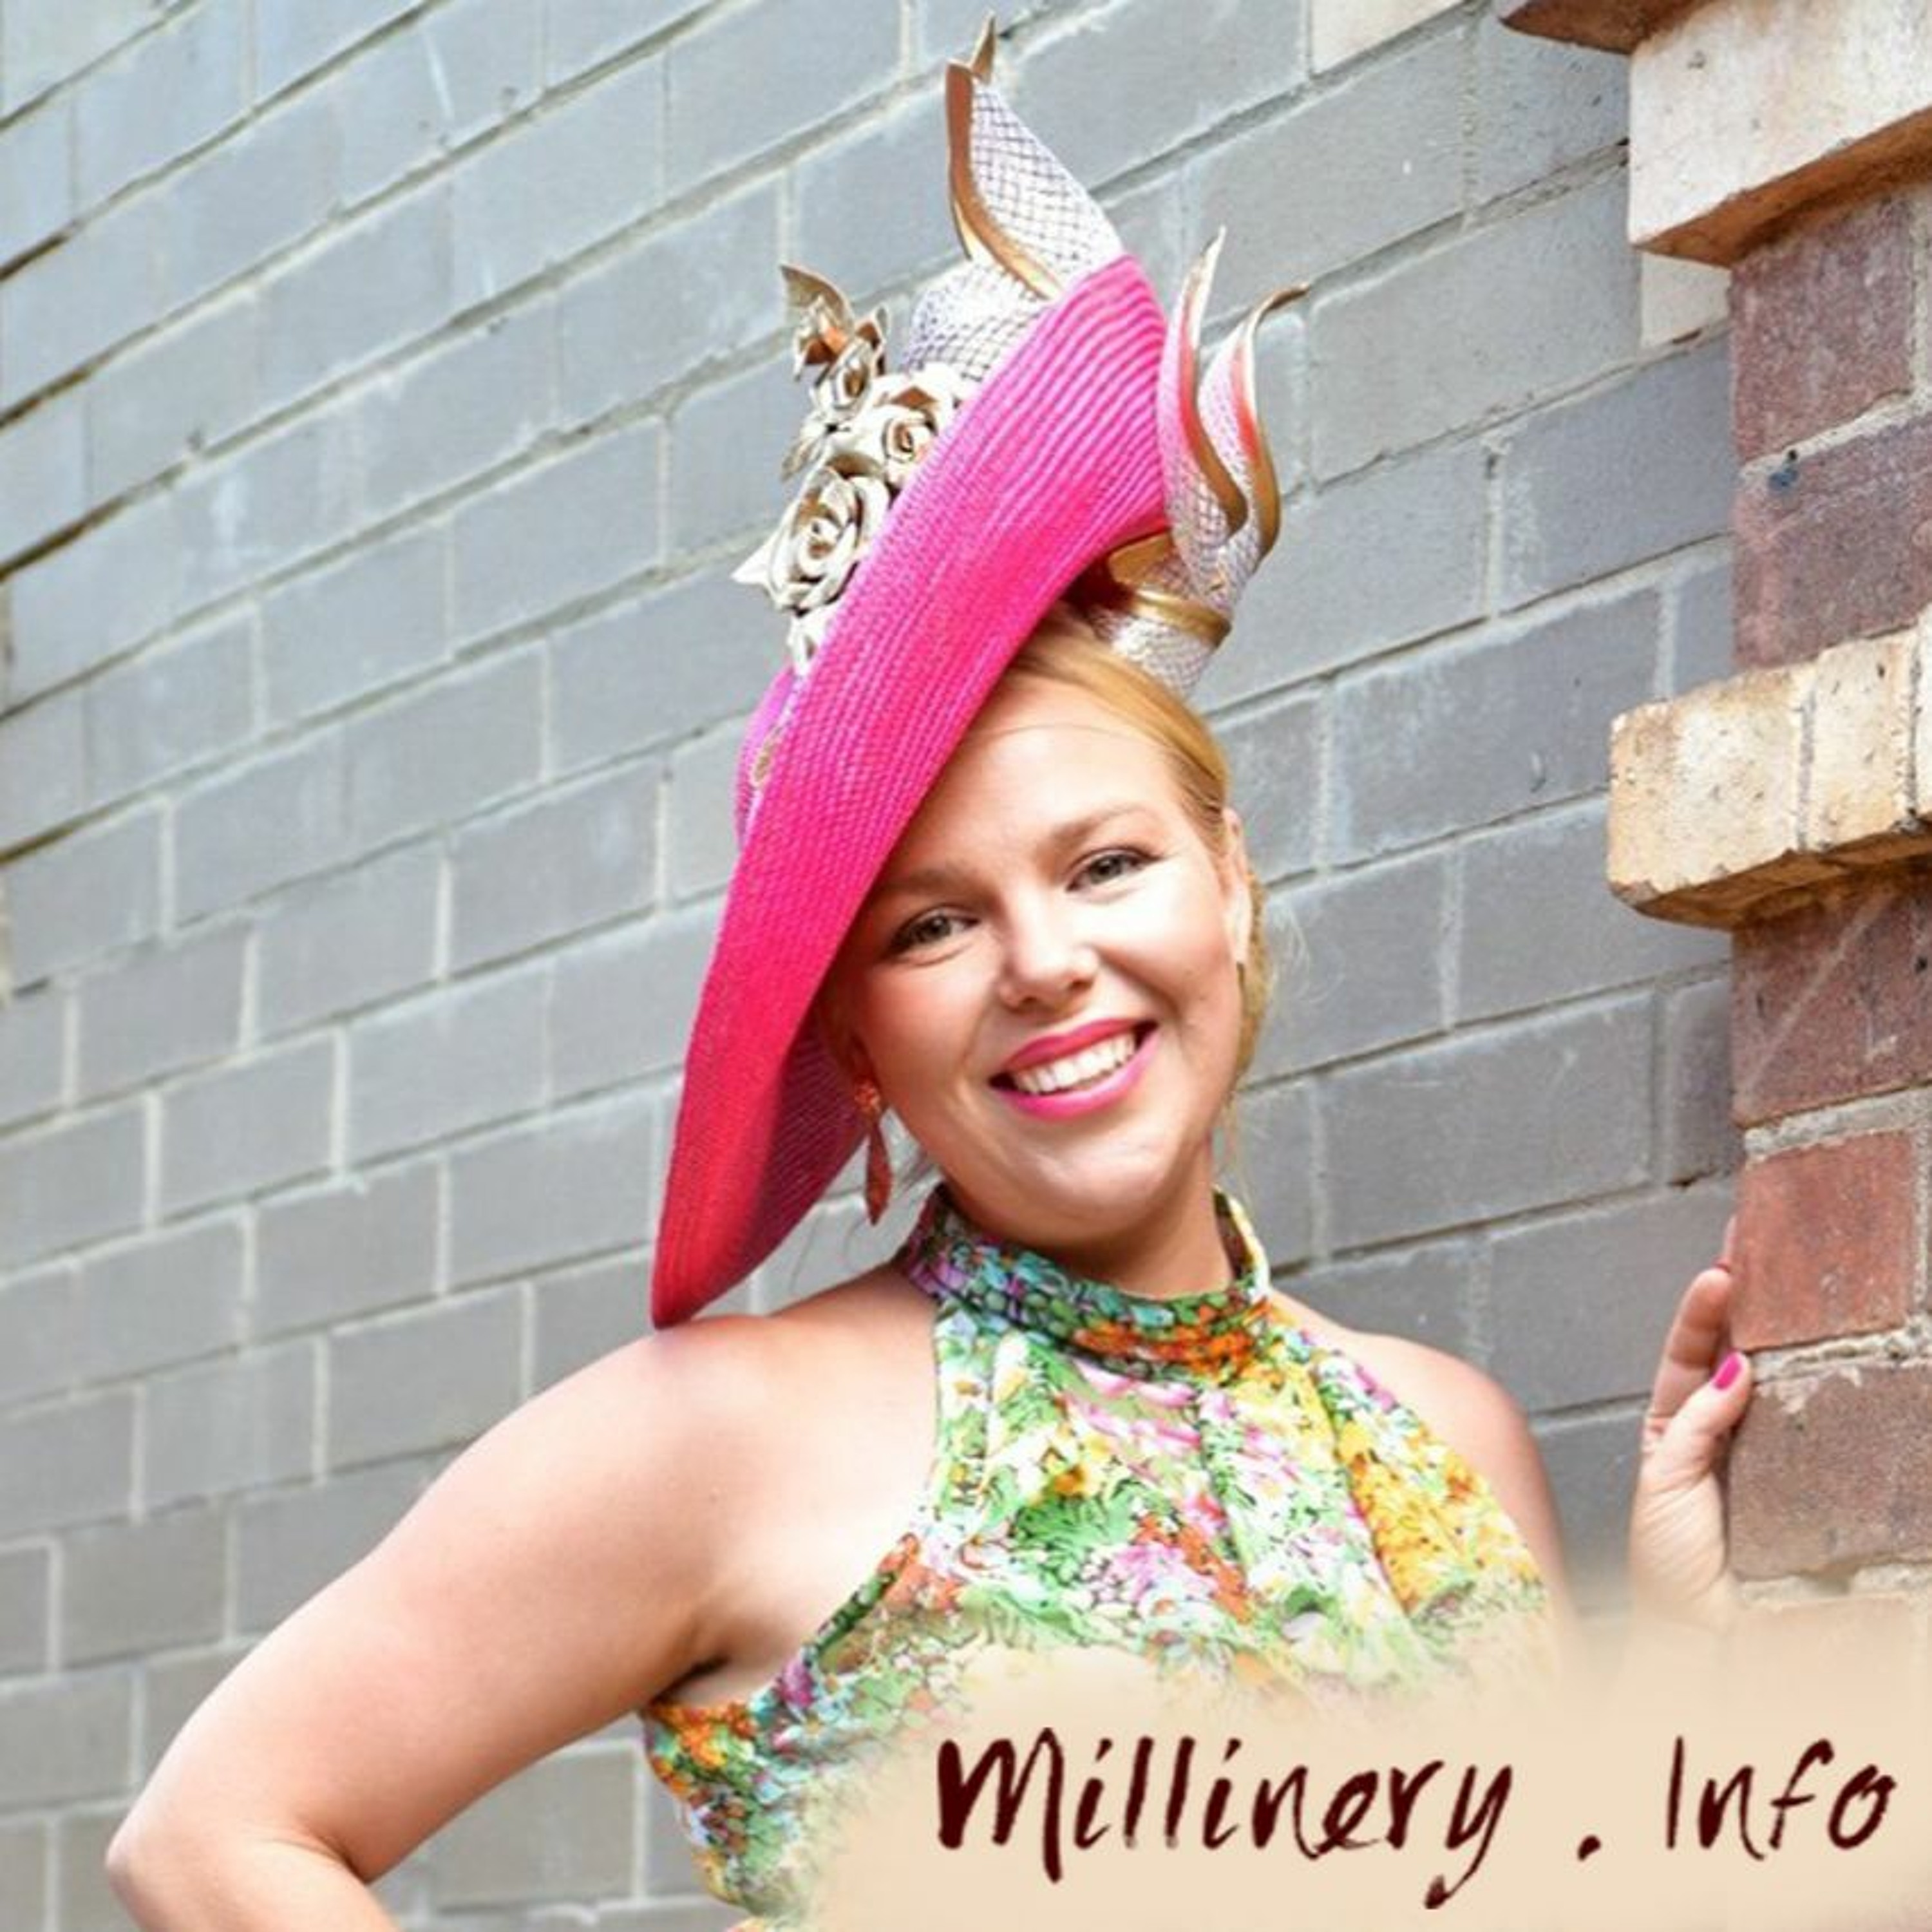 Allport Millinery With Sophie Allport - Millinery.Info